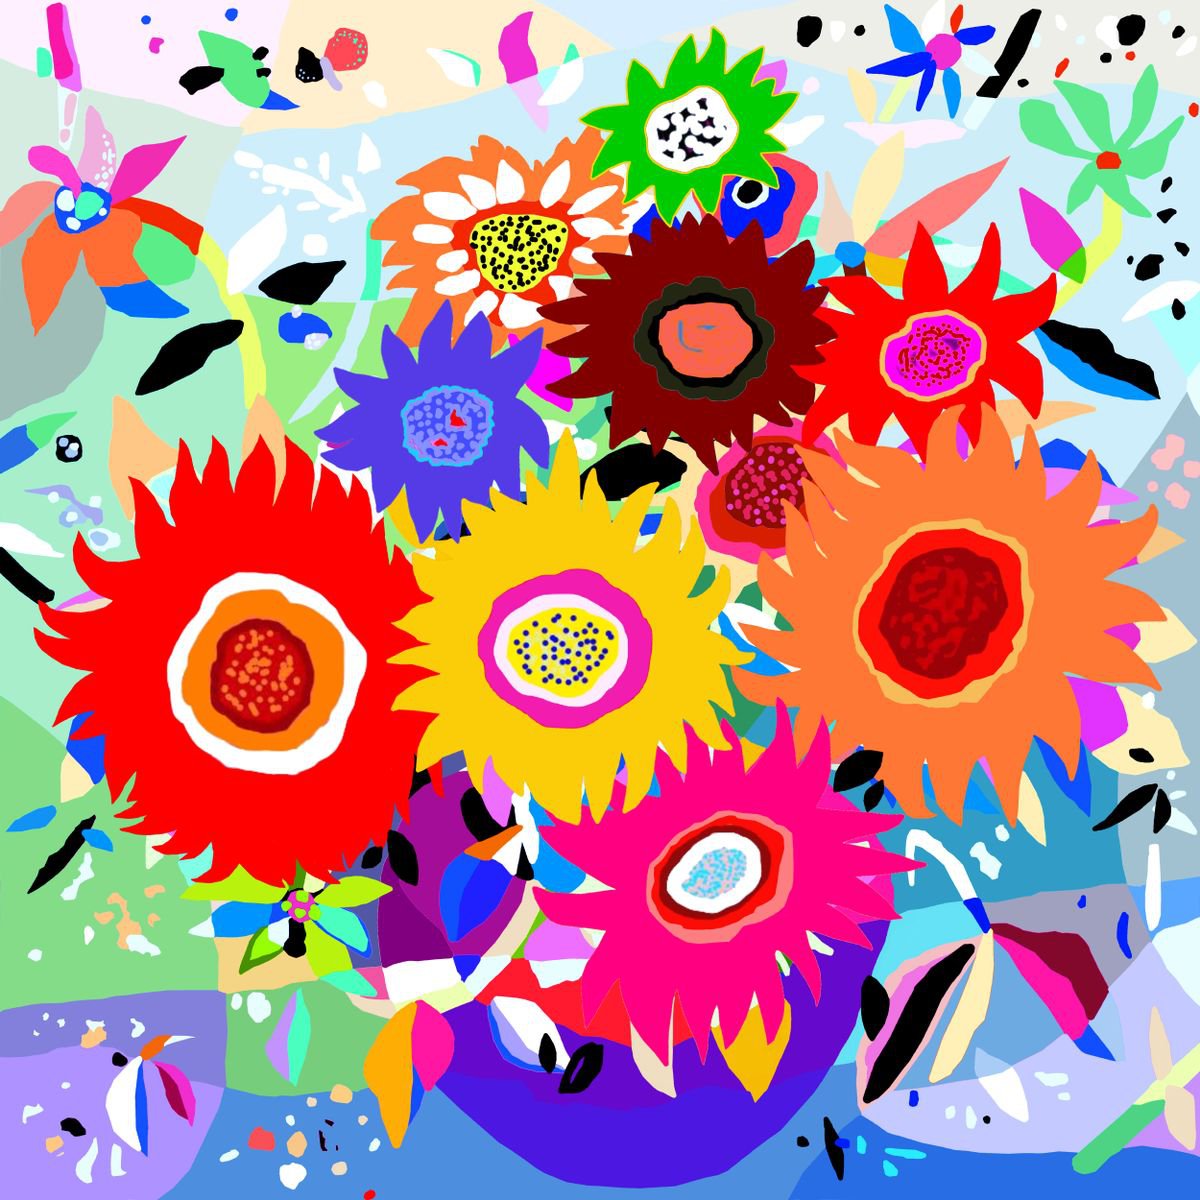 Sunflowers/ Girasoles (pop art, landscape) by Alejos - Pop Art landscapes